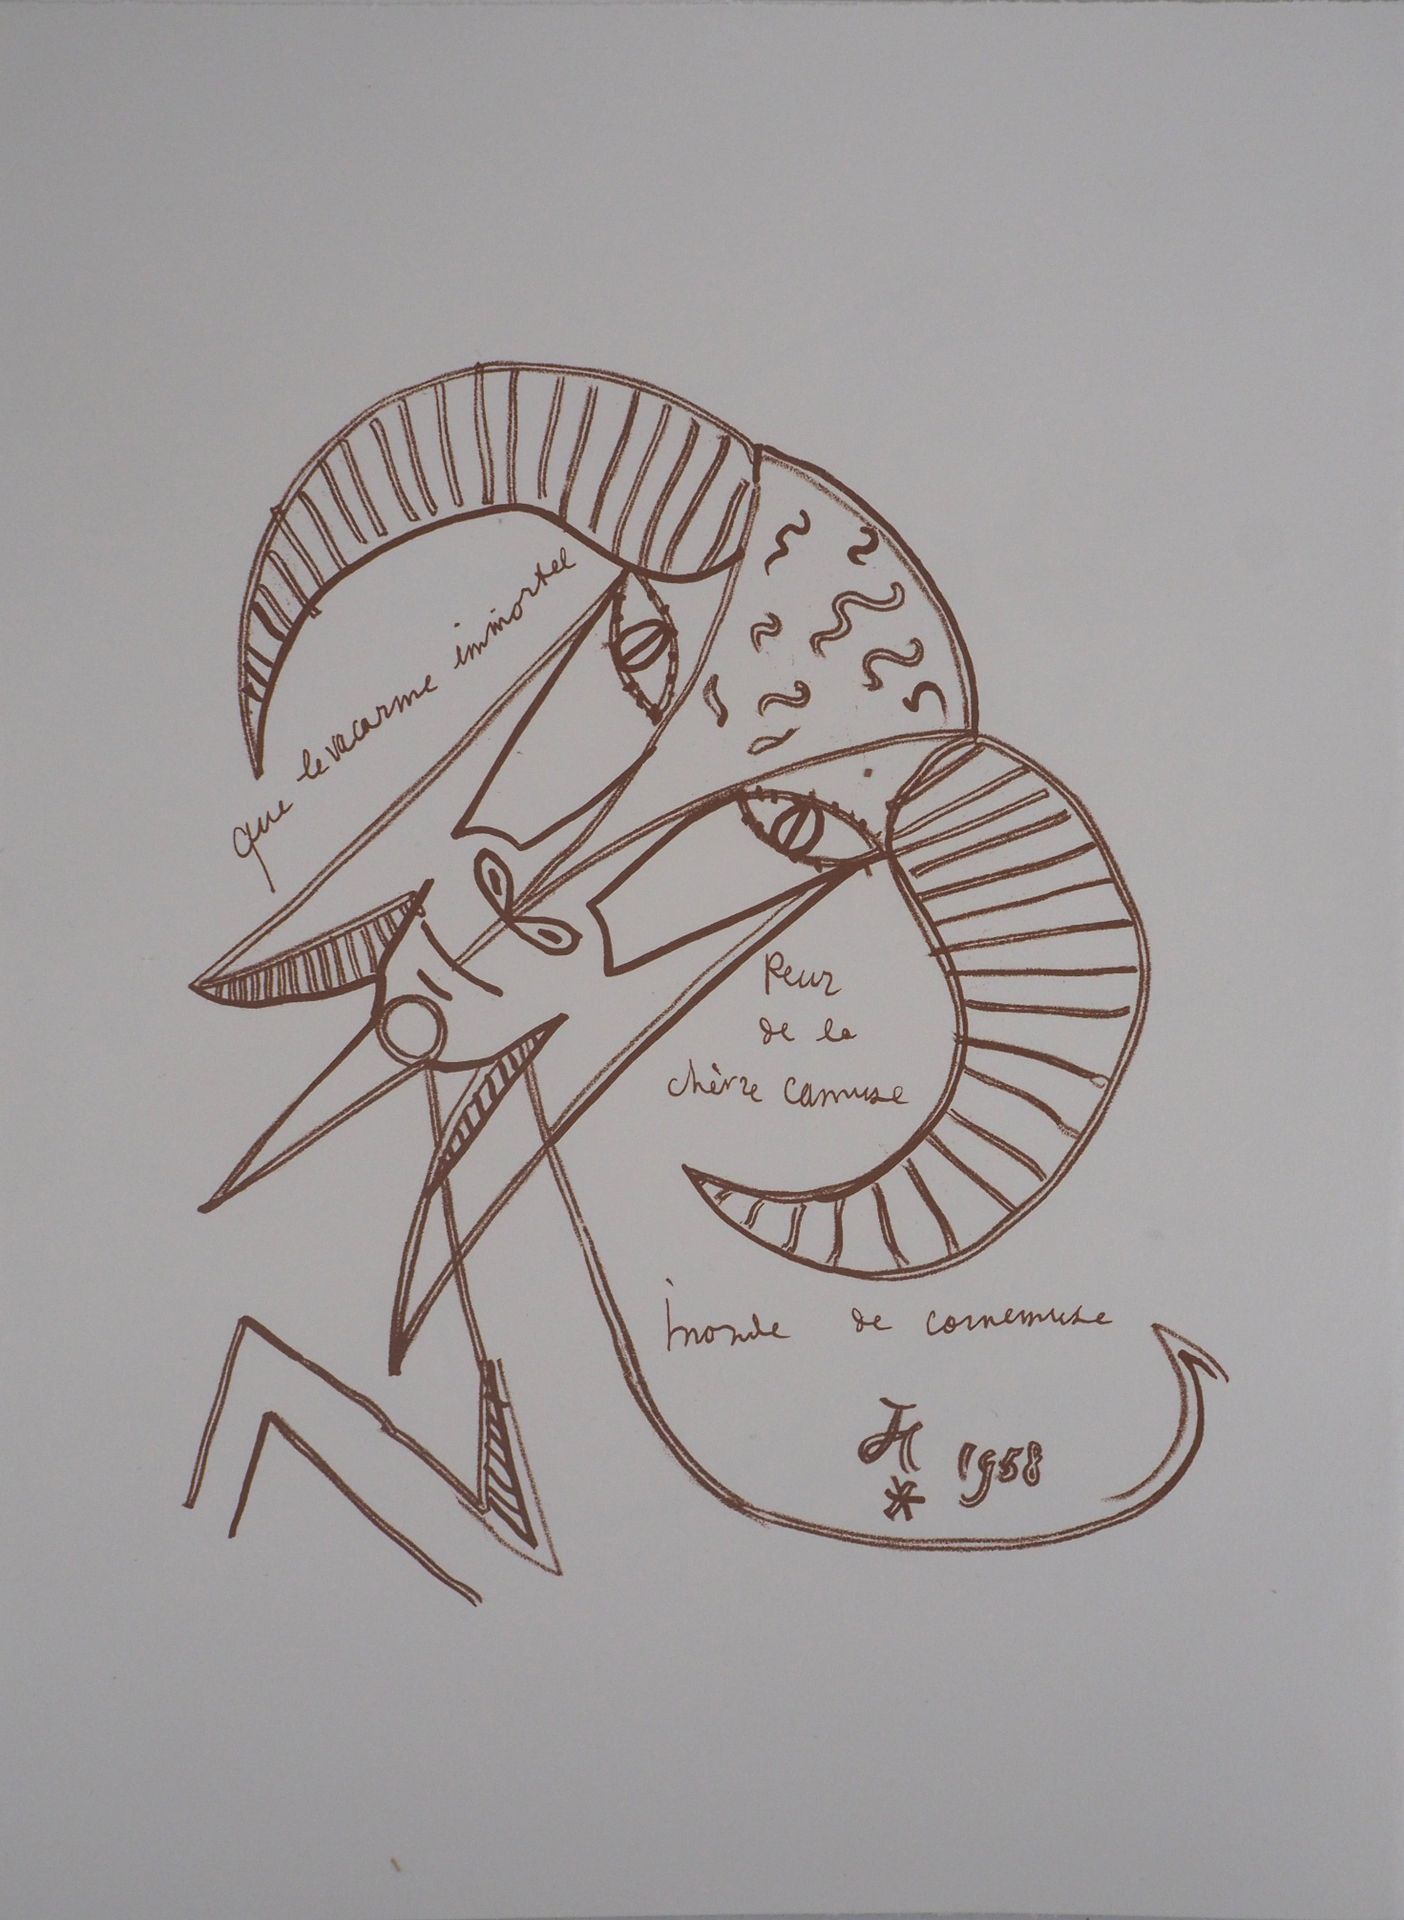 JEAN COCTEAU Jean COCTEAU

山羊

原始石版画

在盘子里有签名的字样

织纹纸上 38 x 28 cm

状况极佳



拍品将由我&hellip;